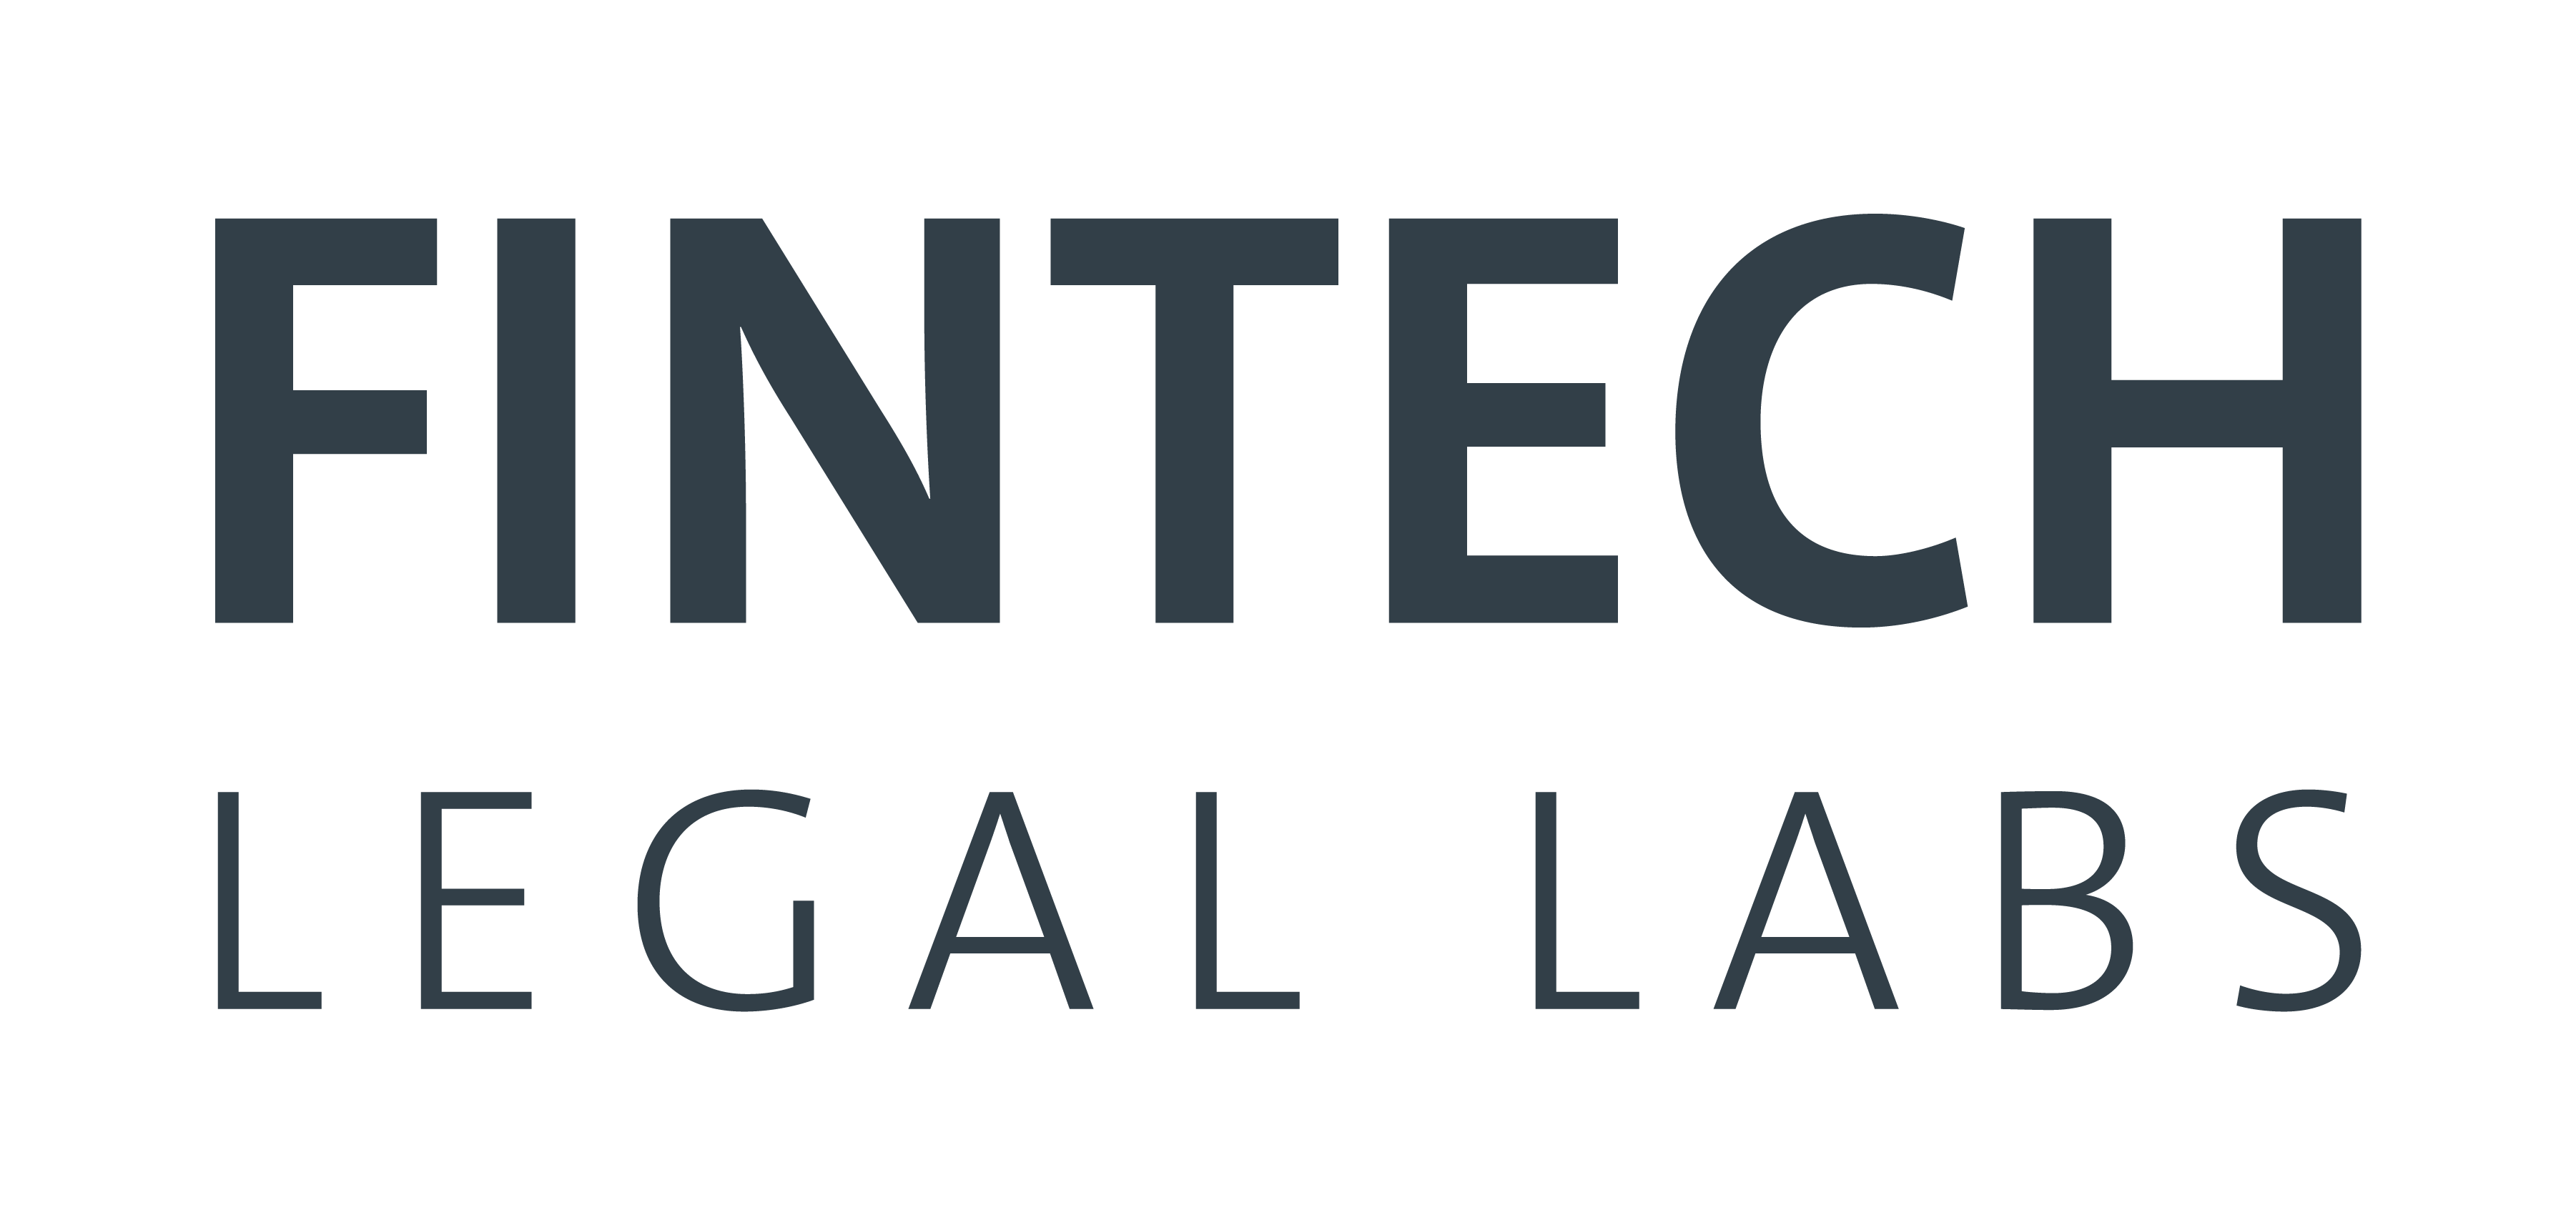 FinTech Legal Labs logo